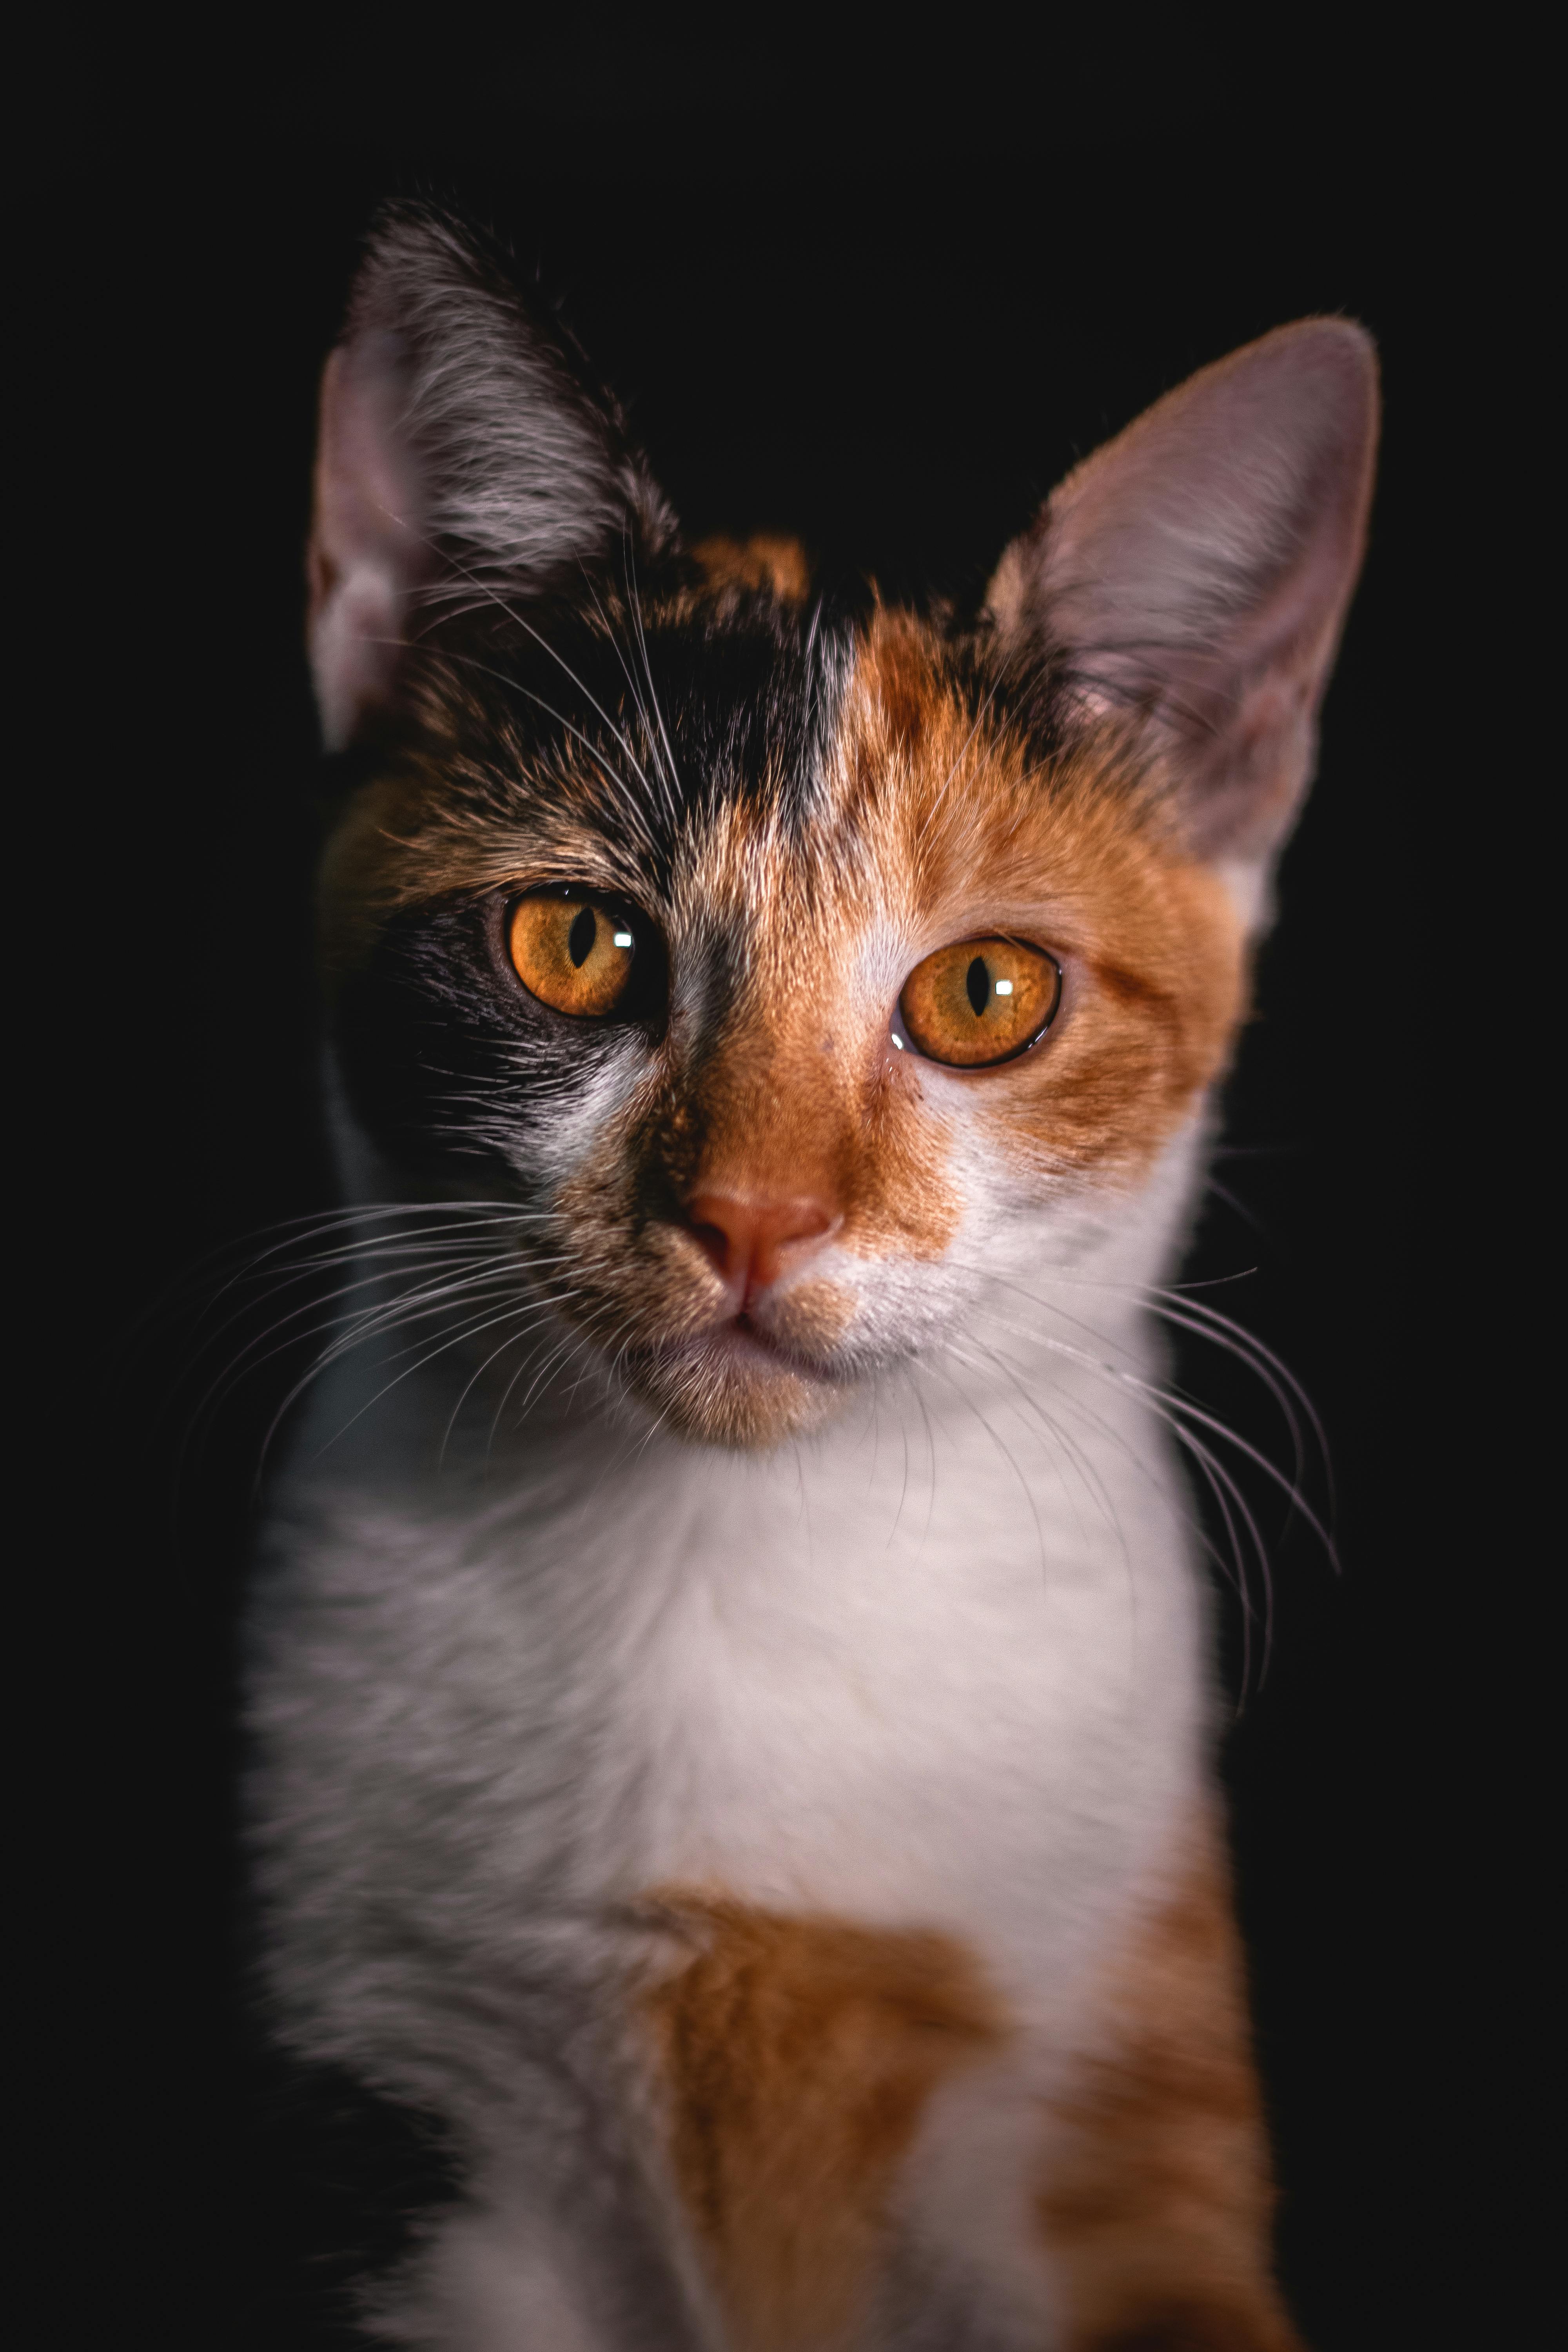 orange tabby kitten with white tail